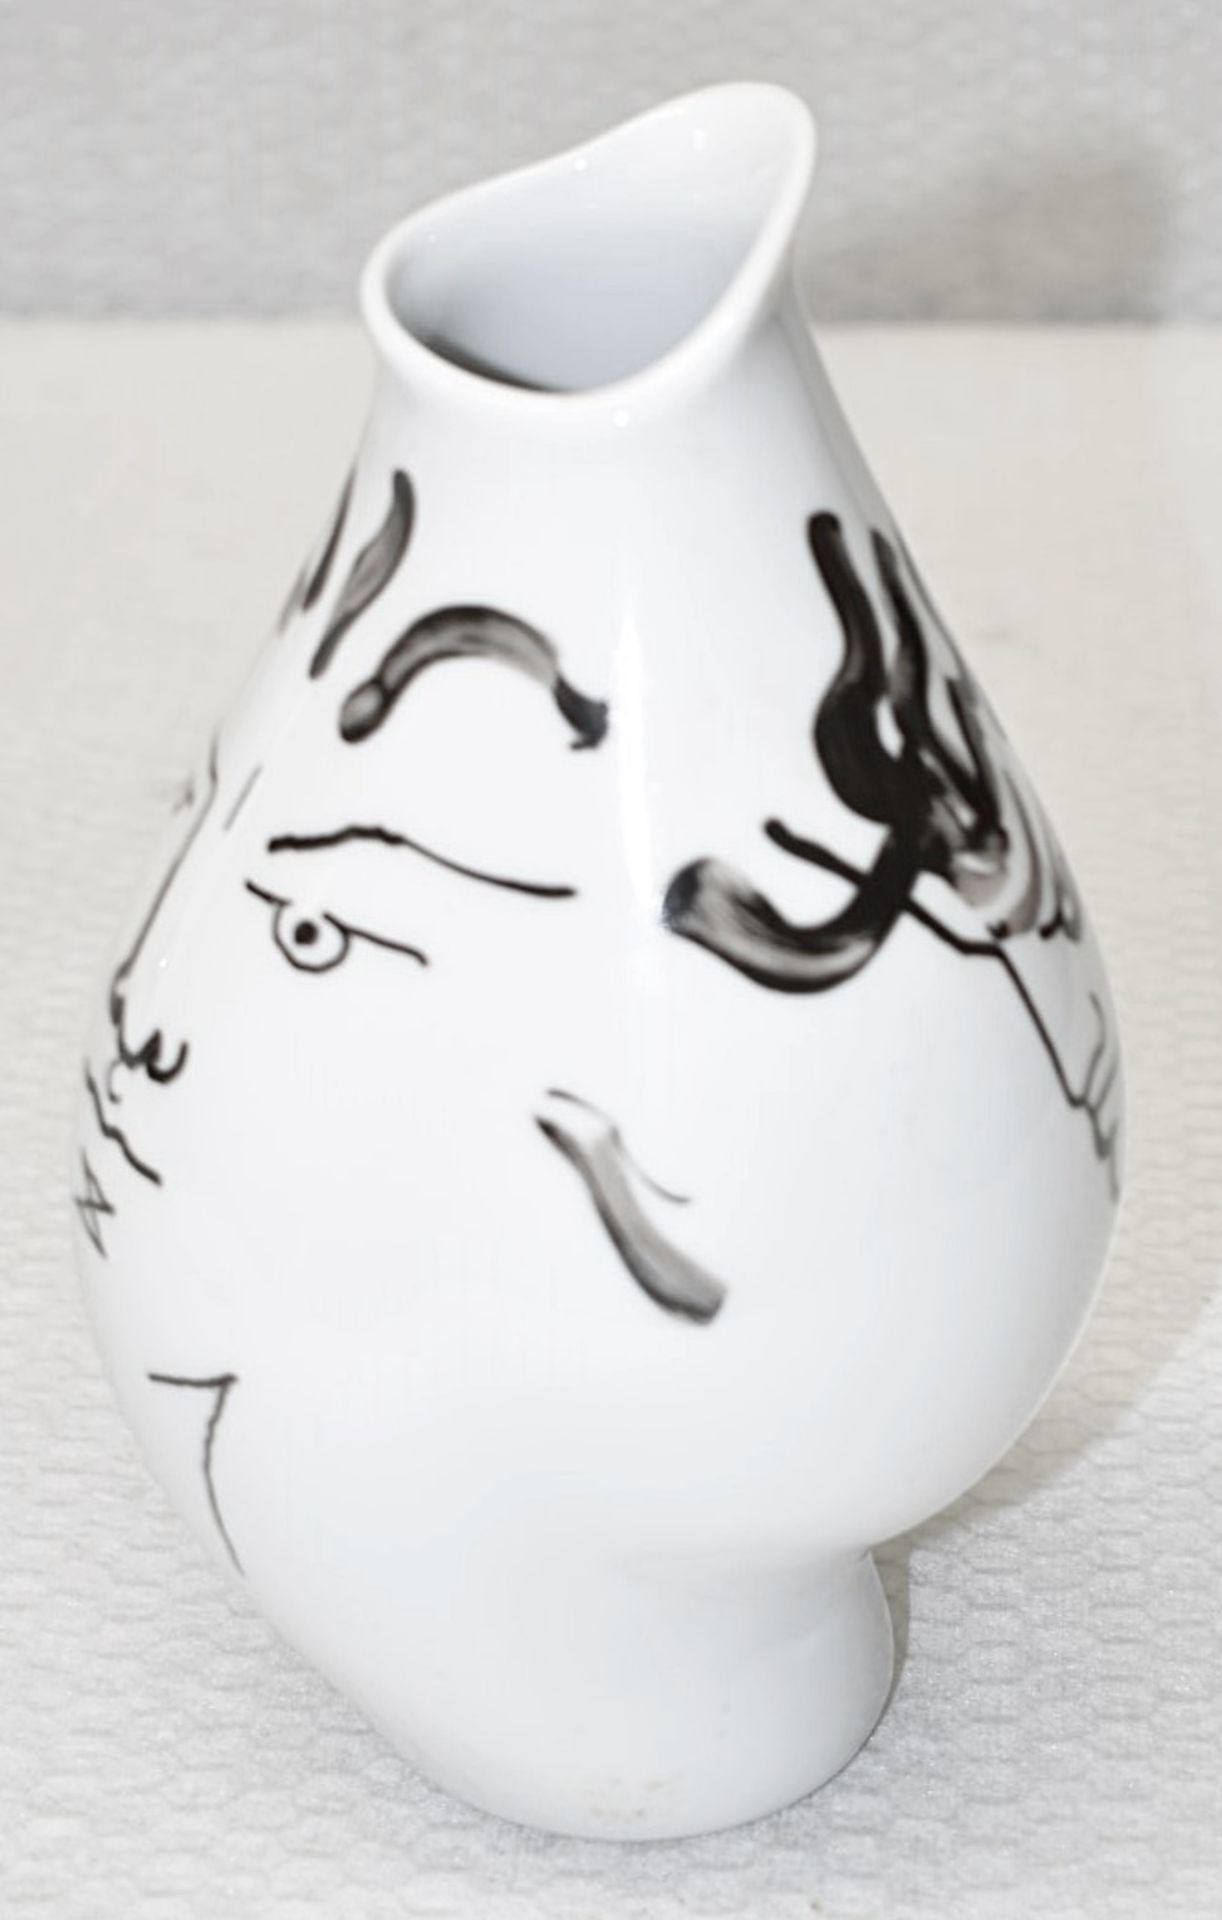 1 x JEAN COCTEAU / ROSENTHAL 'Tetes Face' Sculptural Glazed Porcelain Art Vase, 22cm - Circa 1970 - Image 4 of 10